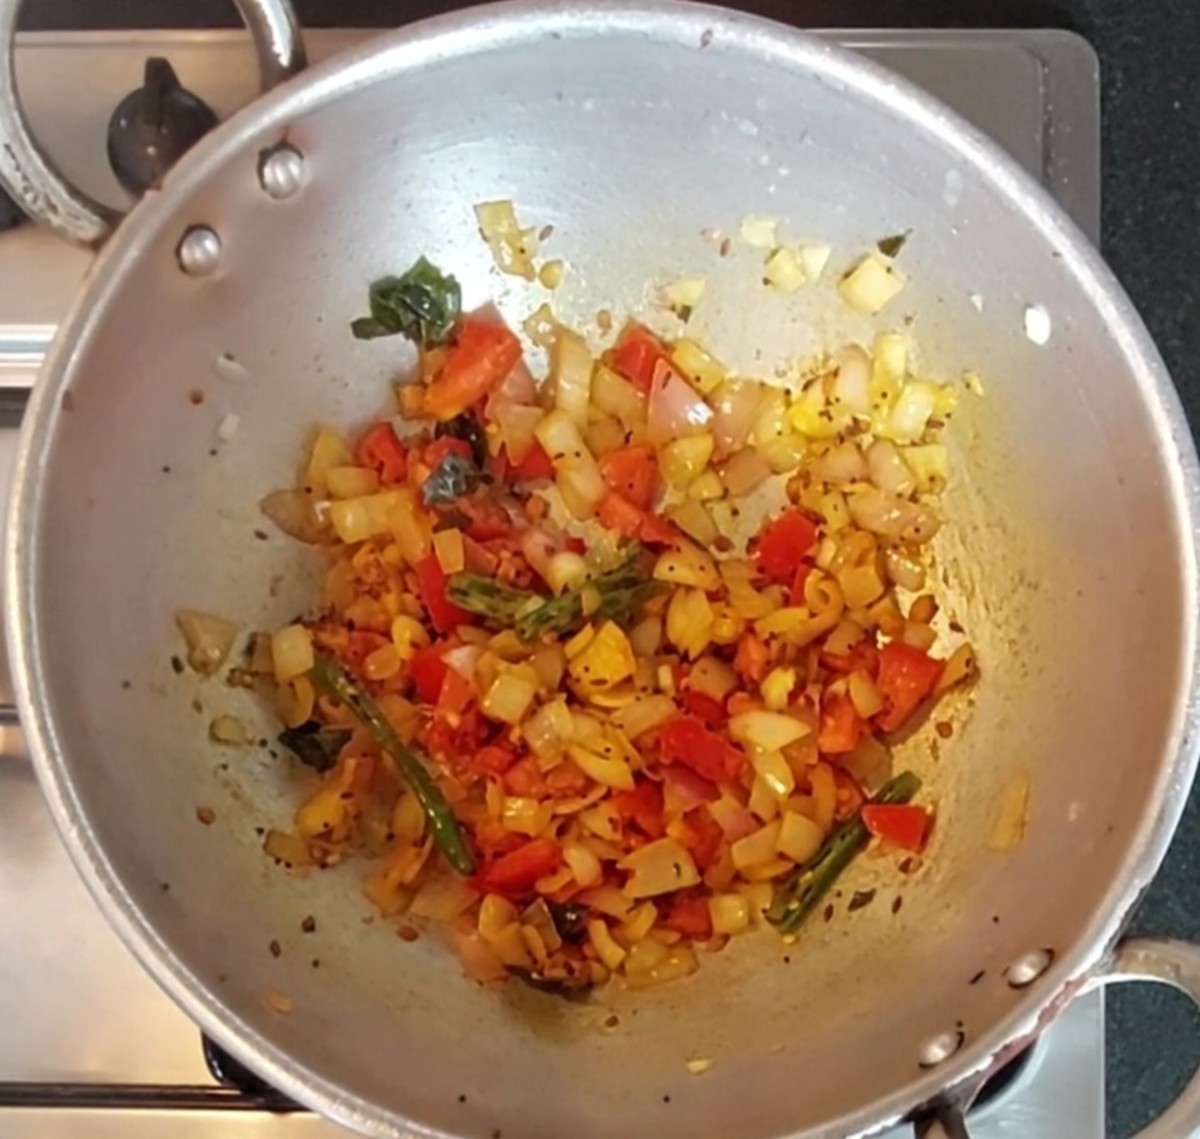 Add 1 chopped tomato and 1/2 teaspoon turmeric powder. Saute till tomato shrinks.